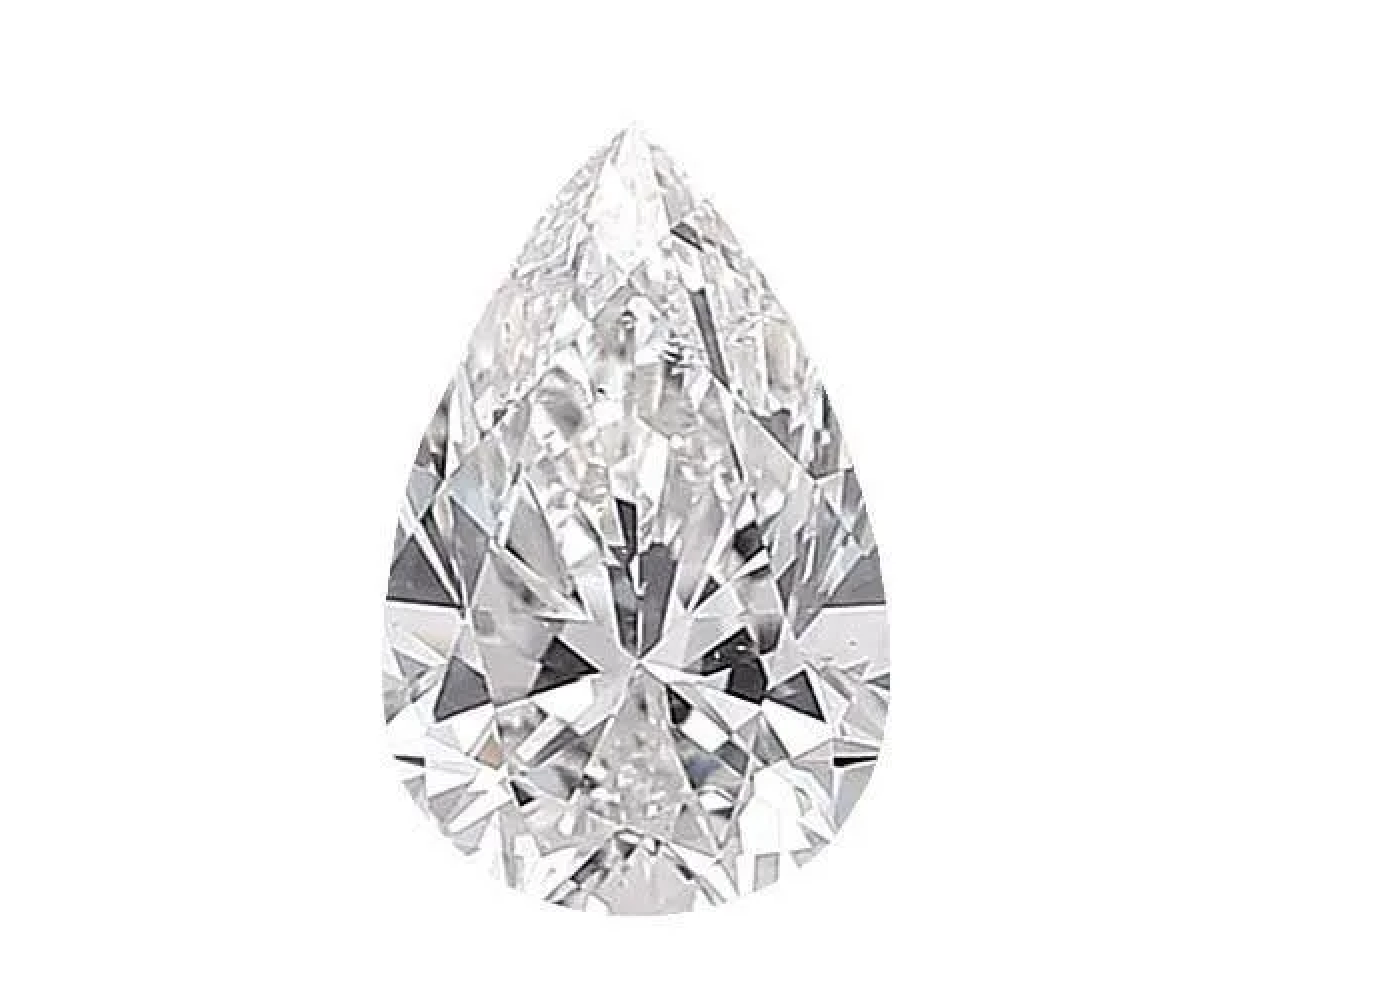 IGI Certified Lab Grown Diamonds - Wholesale prices - 3-4 carats